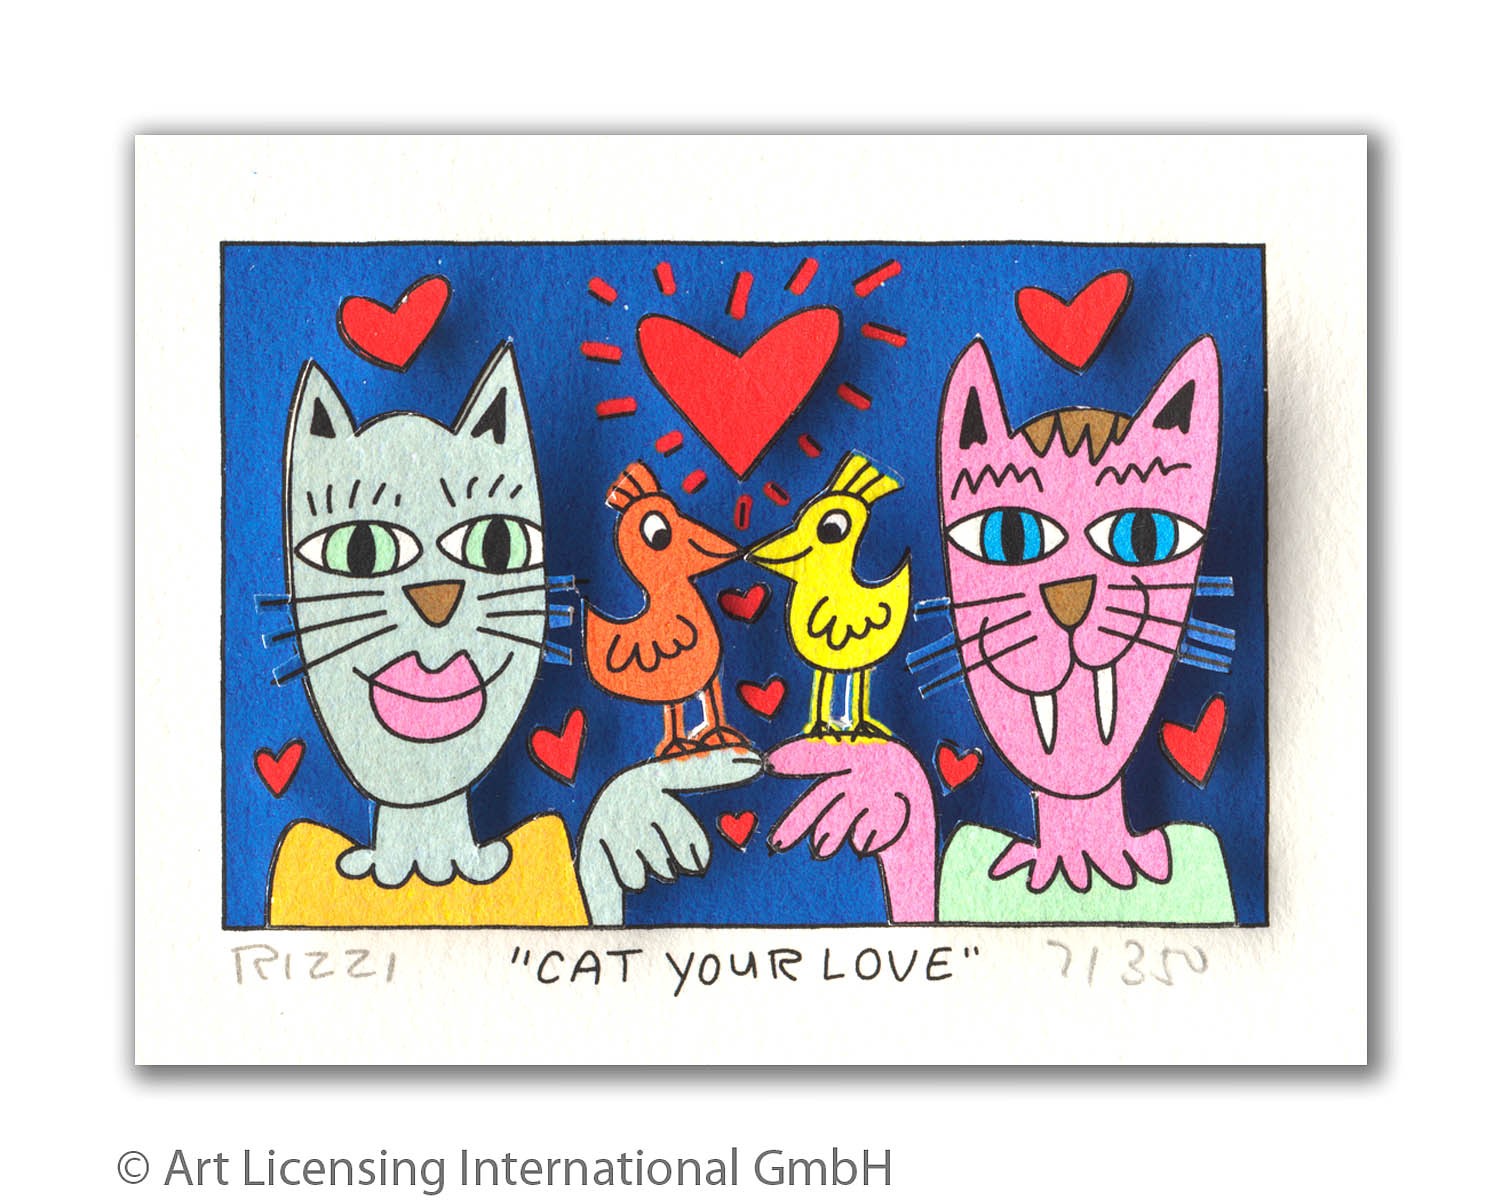 James Rizzi - CAT YOUR LOVE - Original 3D Bild drucksigniert - ohne Rahmen PP-Normale Nummer